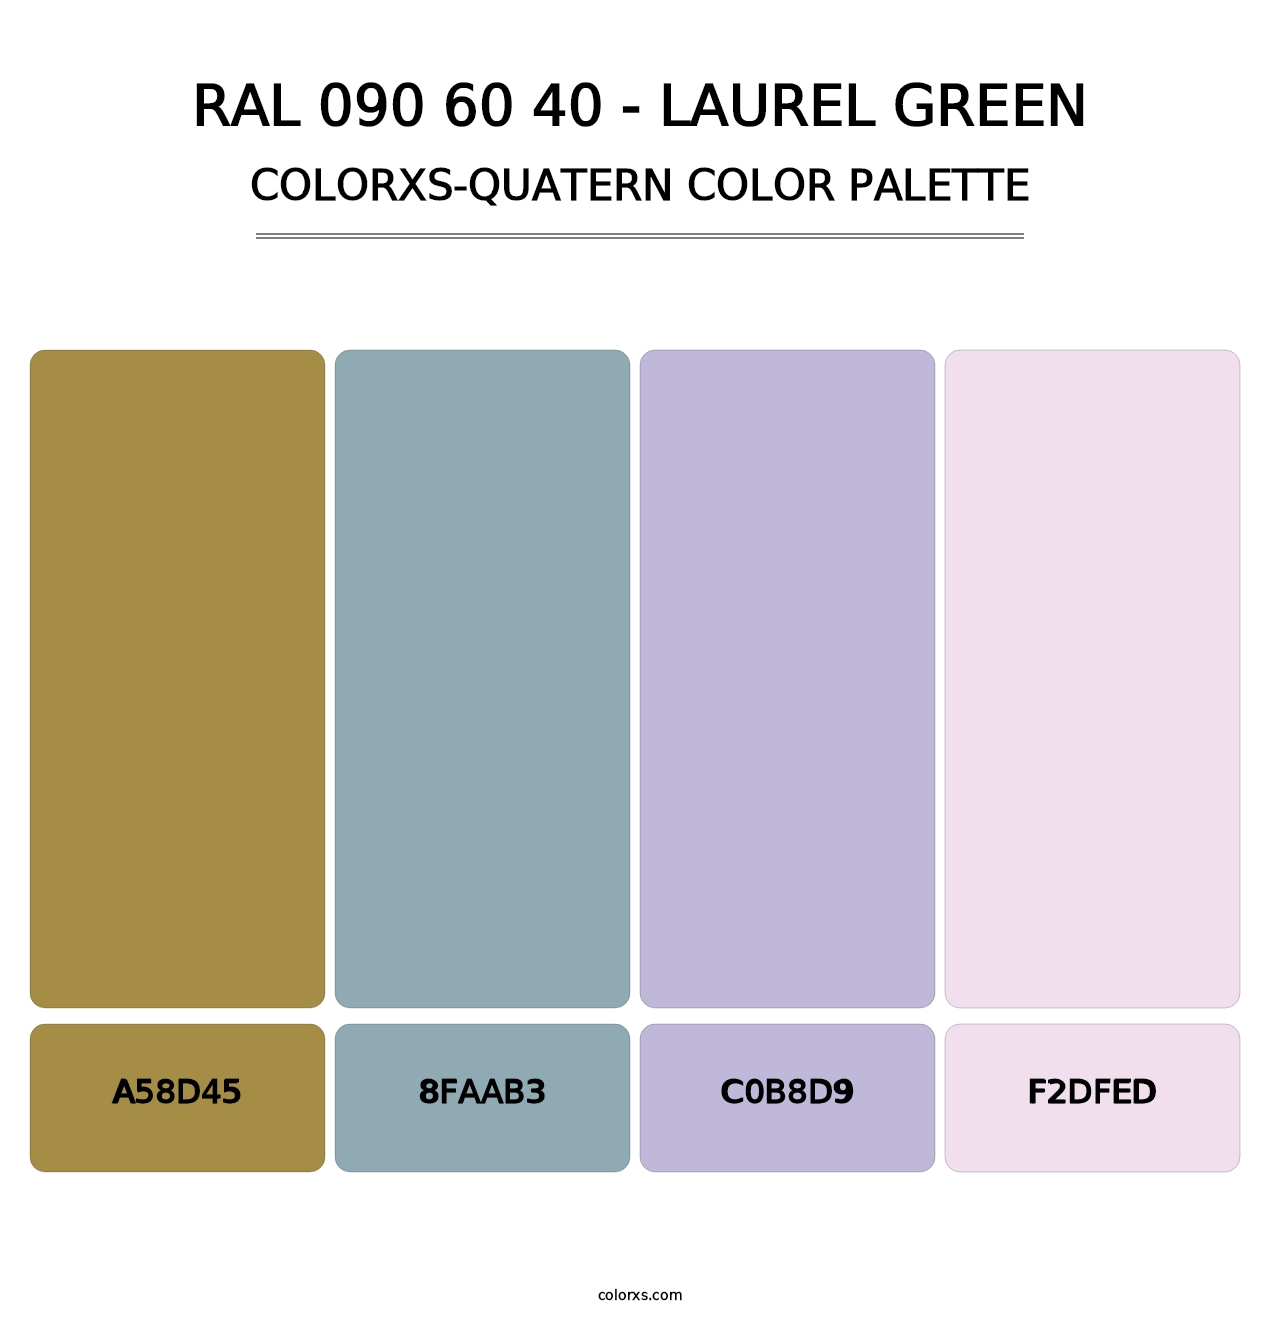 RAL 090 60 40 - Laurel Green - Colorxs Quatern Palette